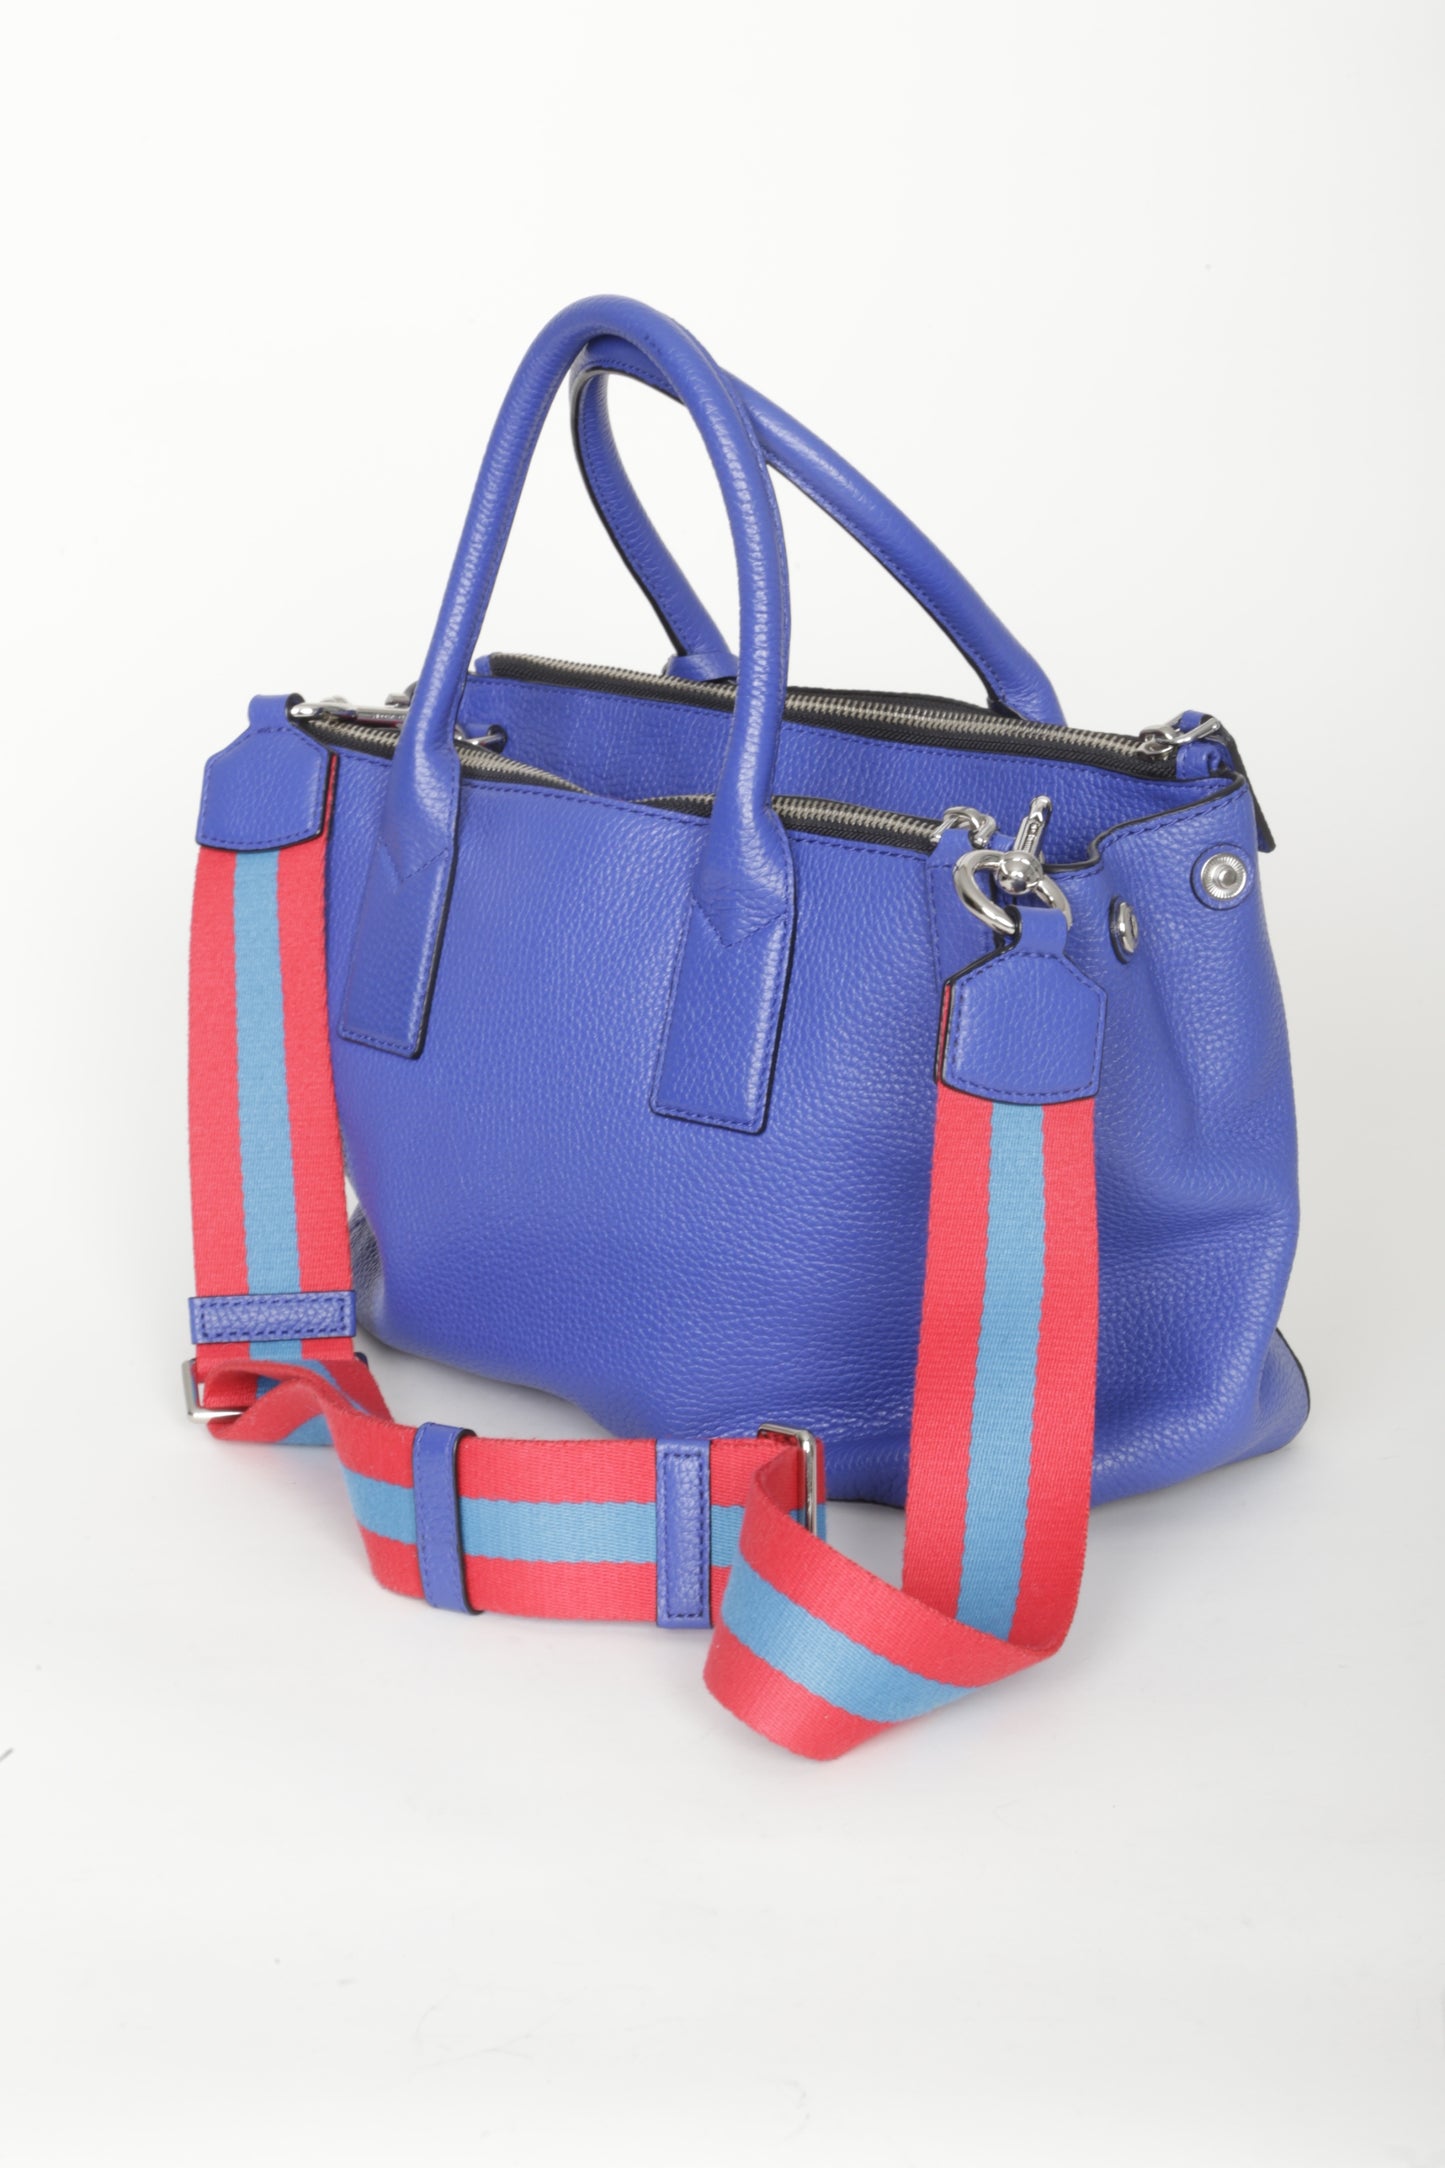 Marc by Marc Jacobs Unisex Blue Bag Size O/S